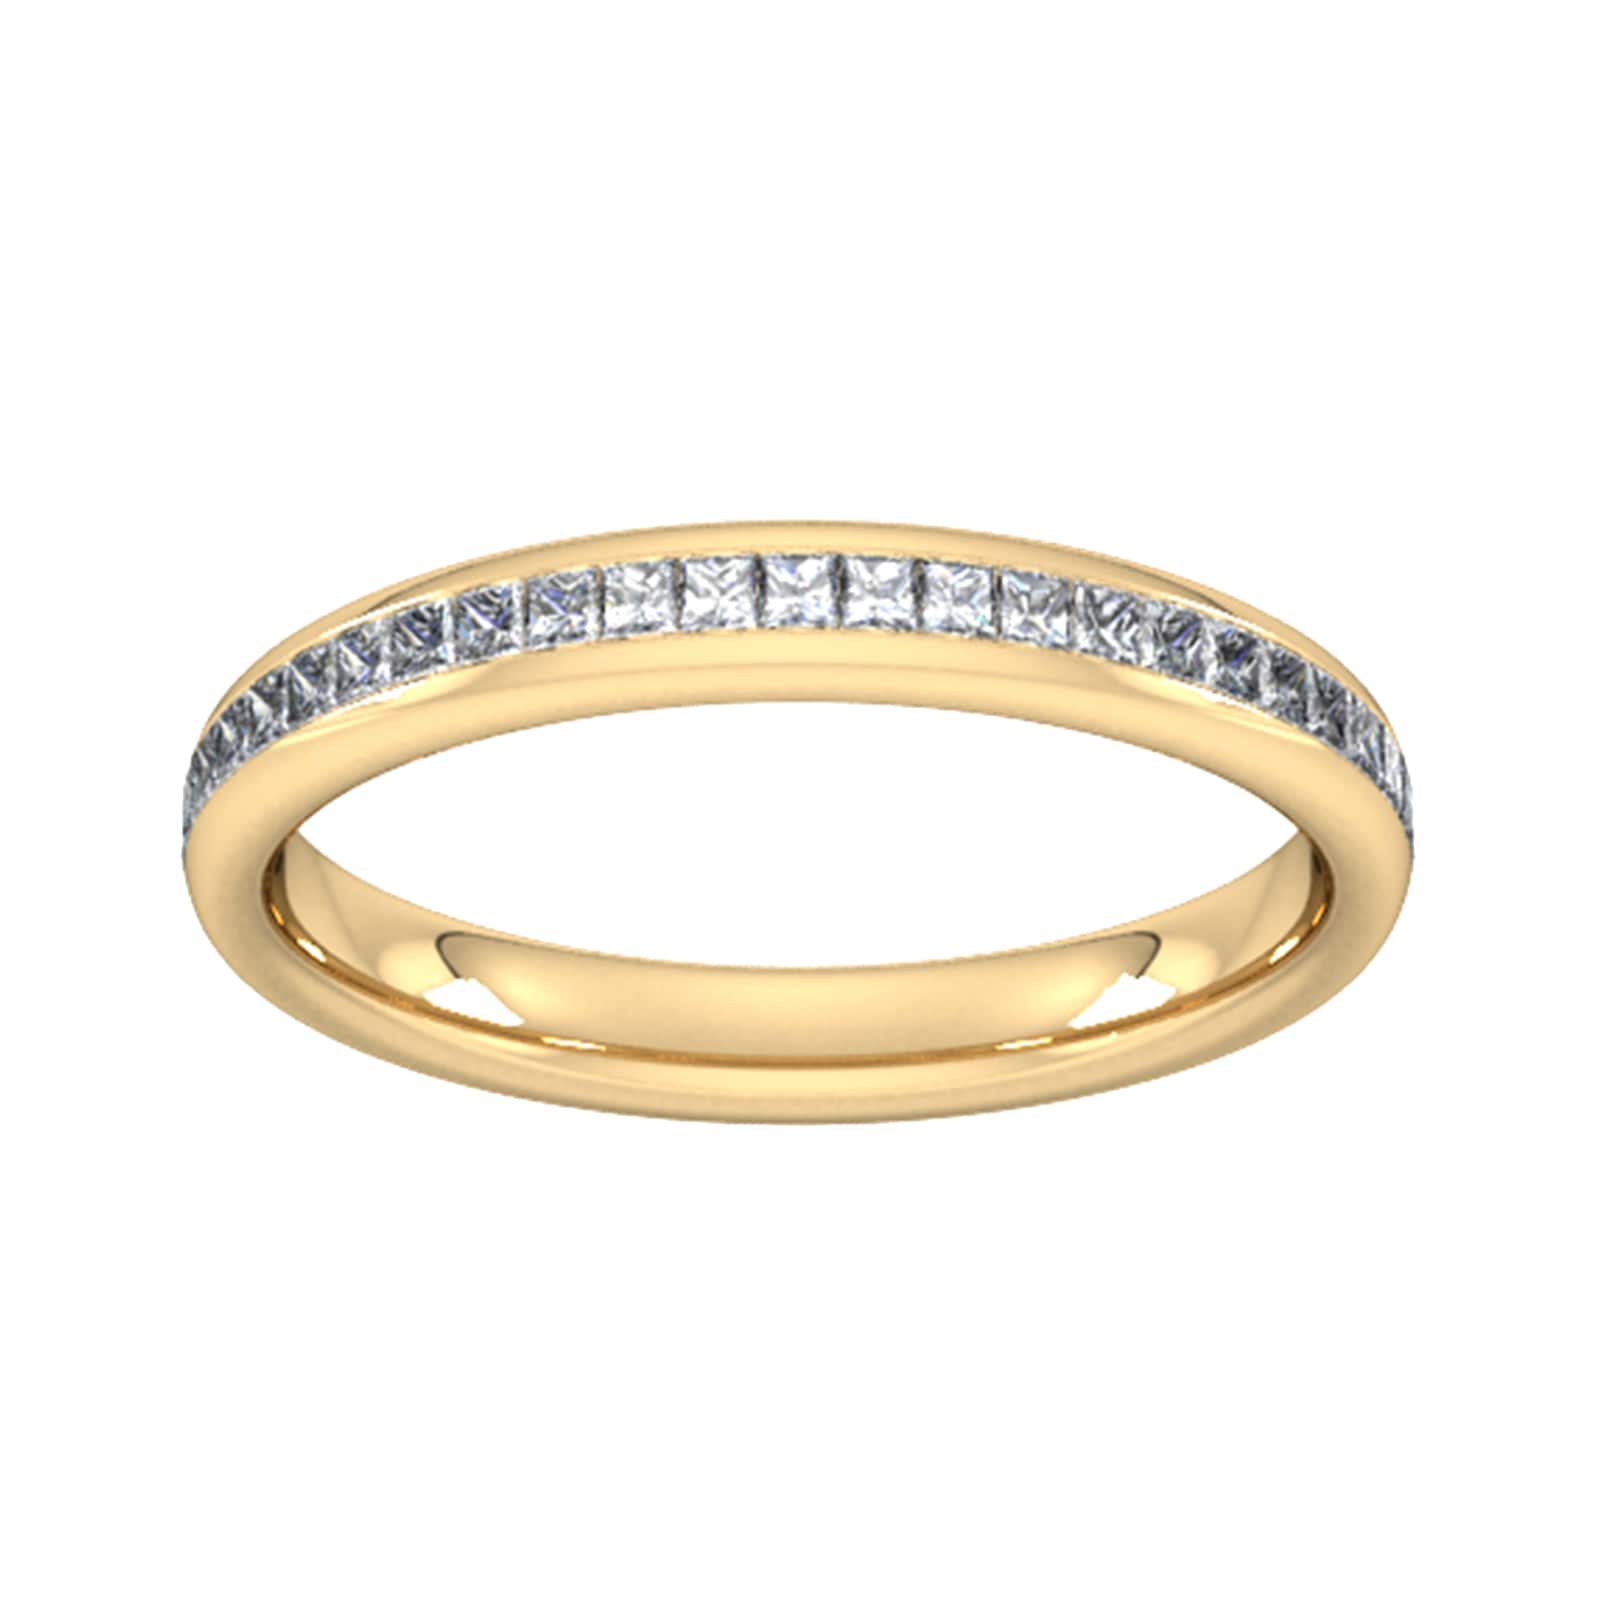 0.34 Carat Total Weight Princess Cut Channel Set Wedding Ring In 9 Carat Yellow Gold - Ring Size U